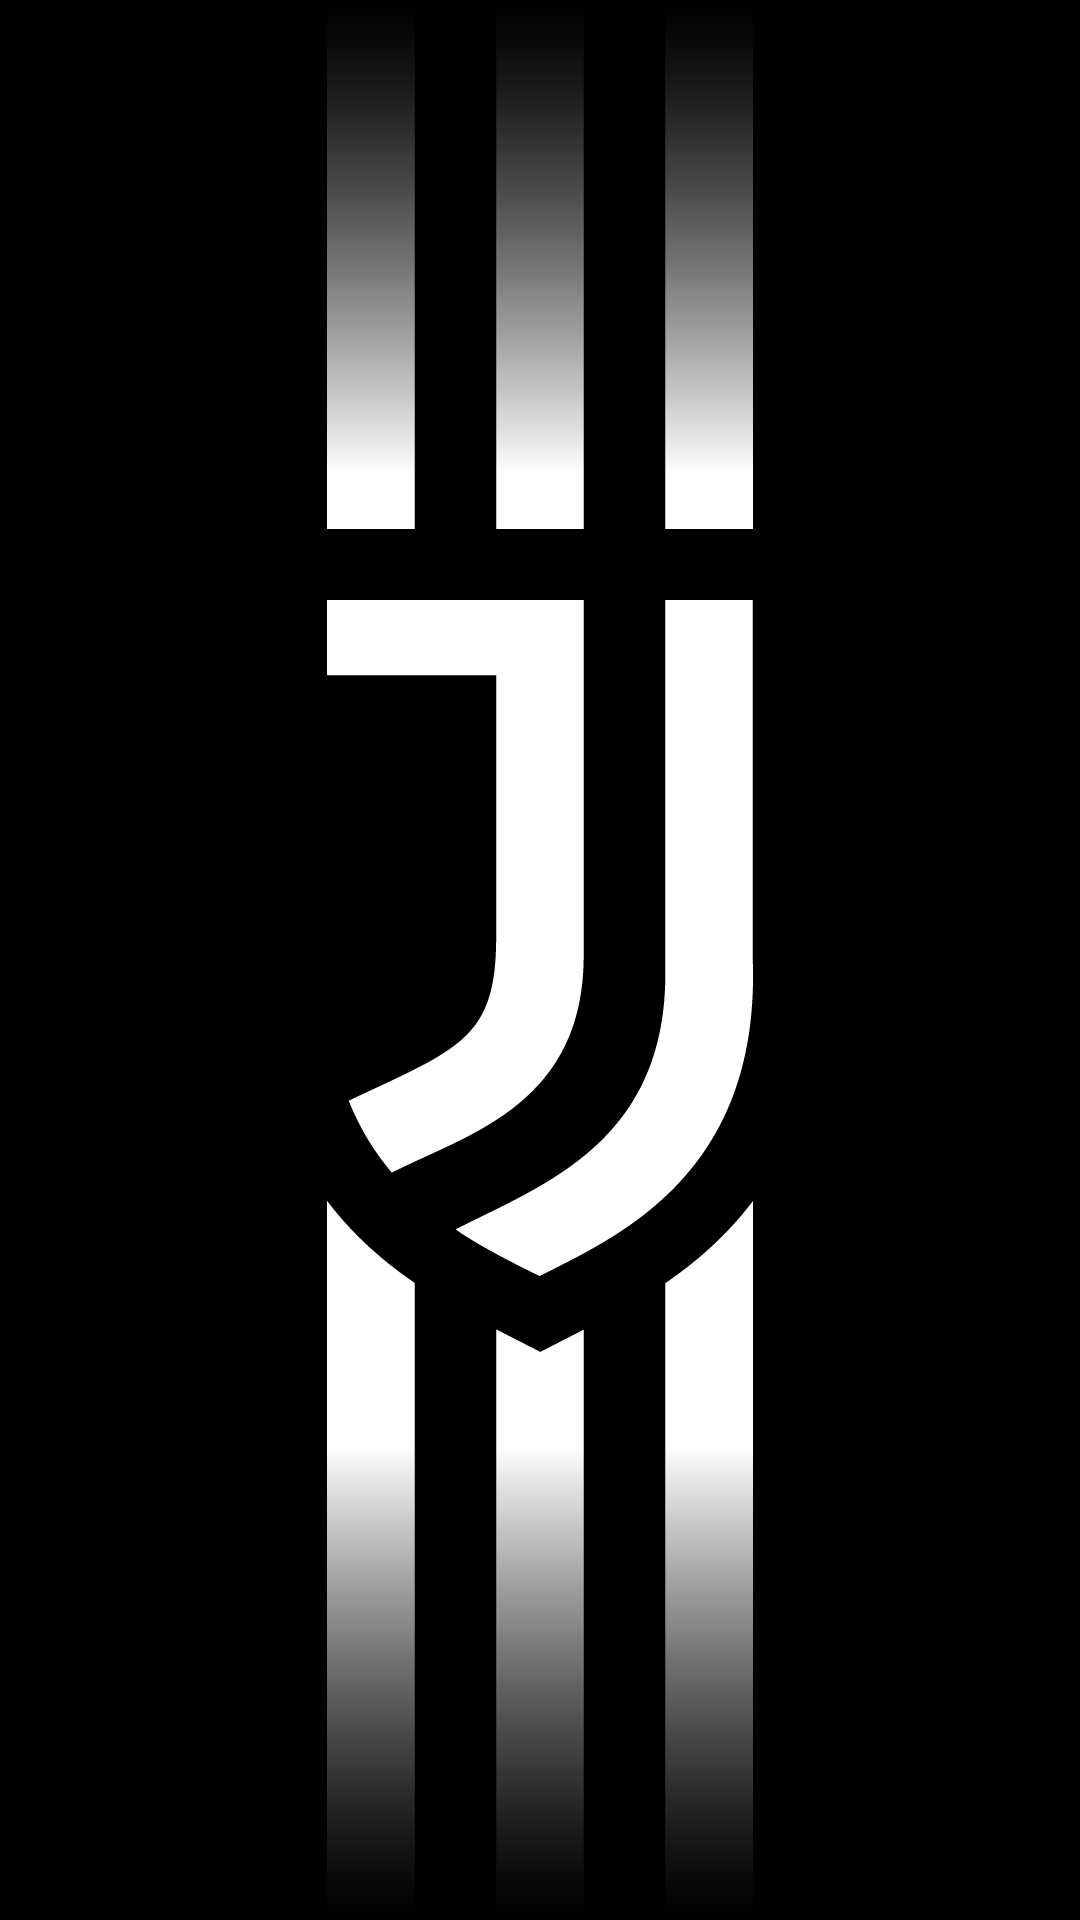 New Logo Juventus Wallpaper For iPhone. Bola kaki